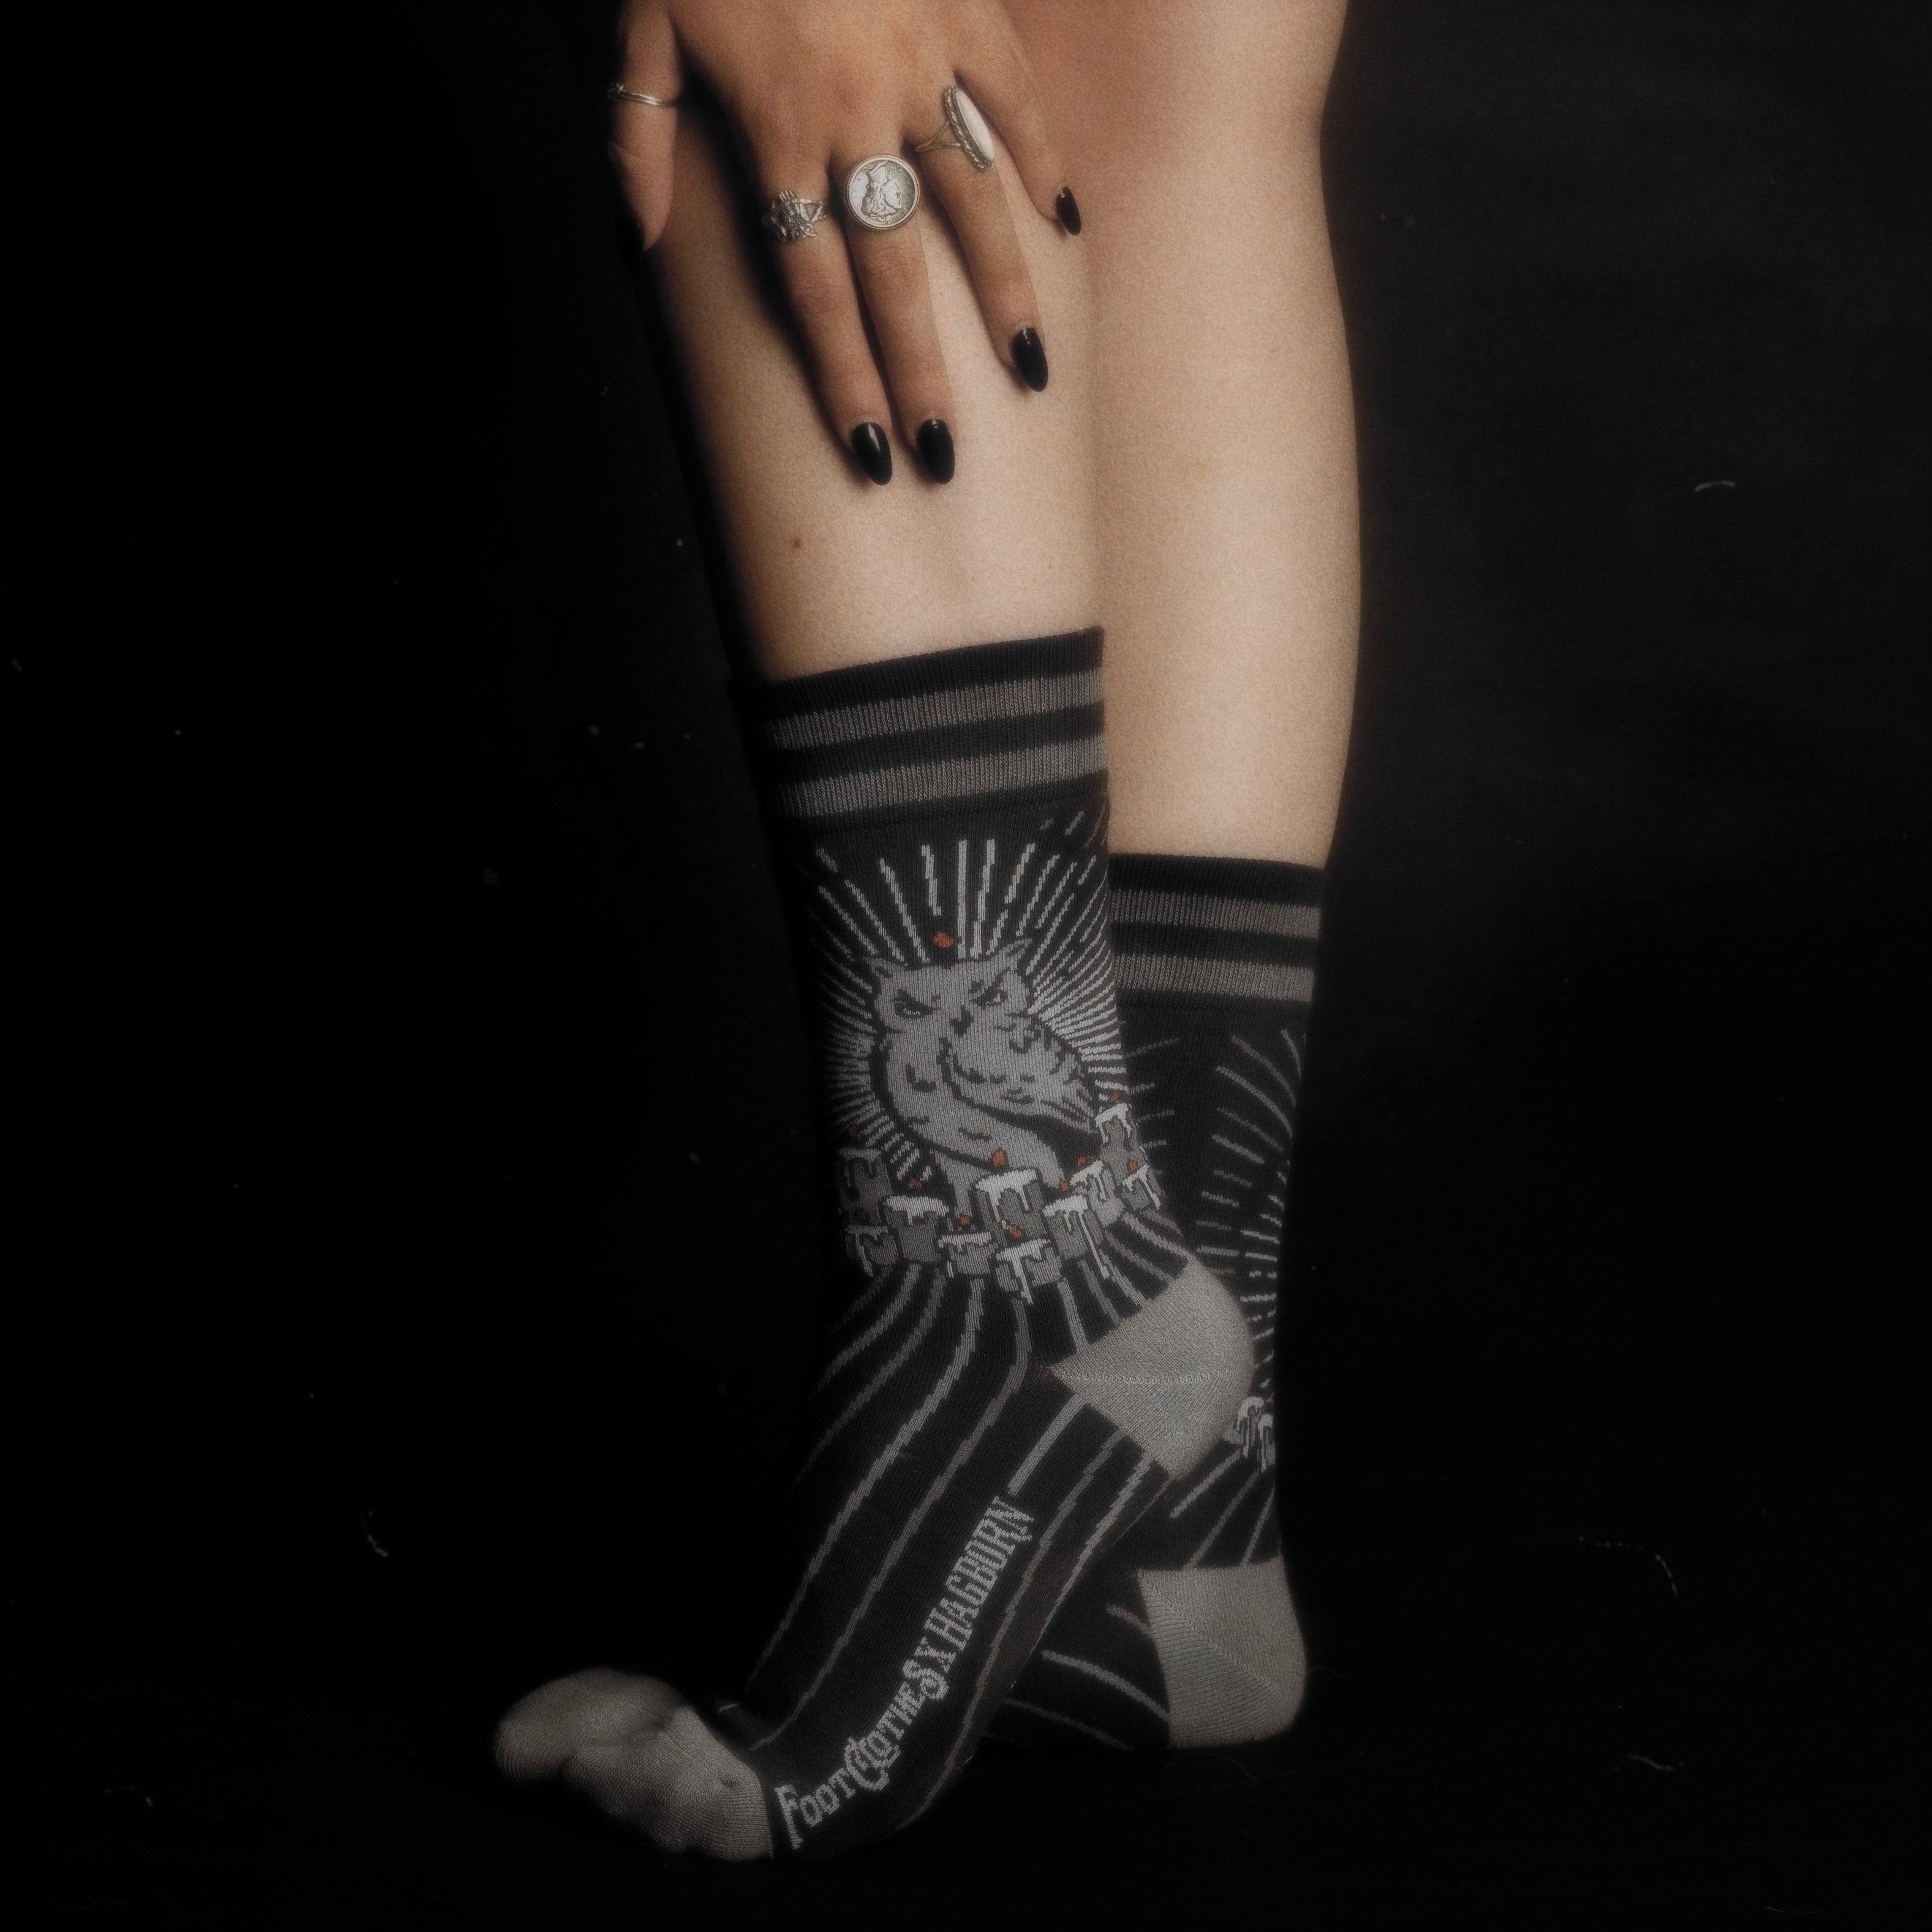 Night Owl FootClothes x Hagborn Collab Socks - FootClothes